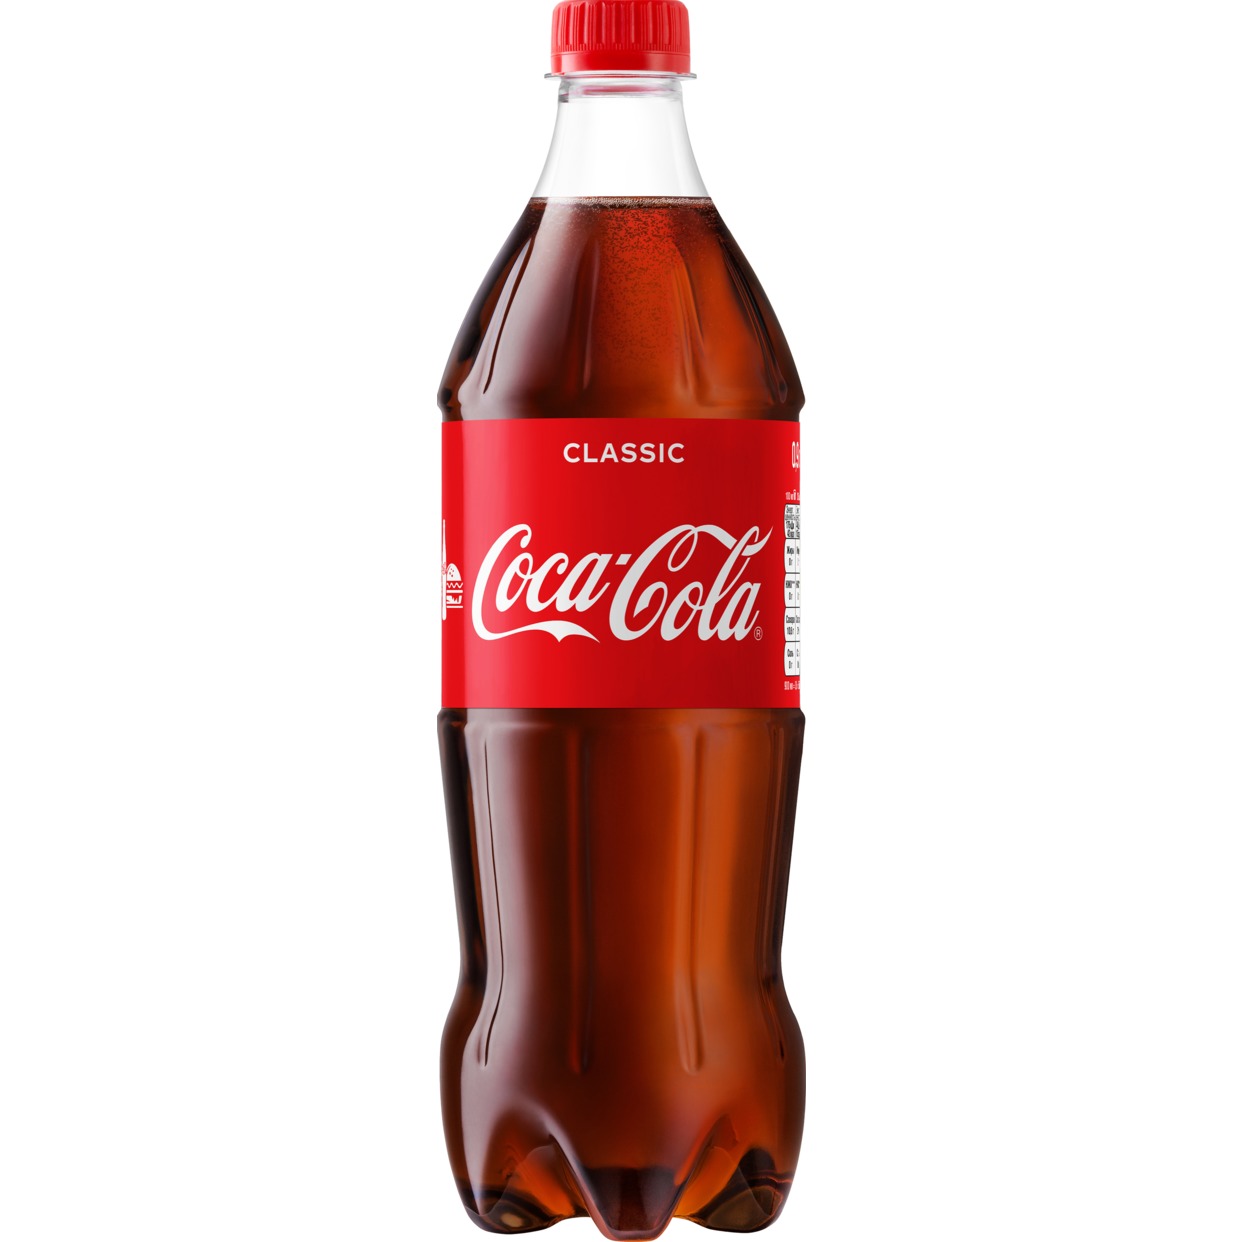 Напиток Coca-cola, 0,9 л по акции в Пятерочке